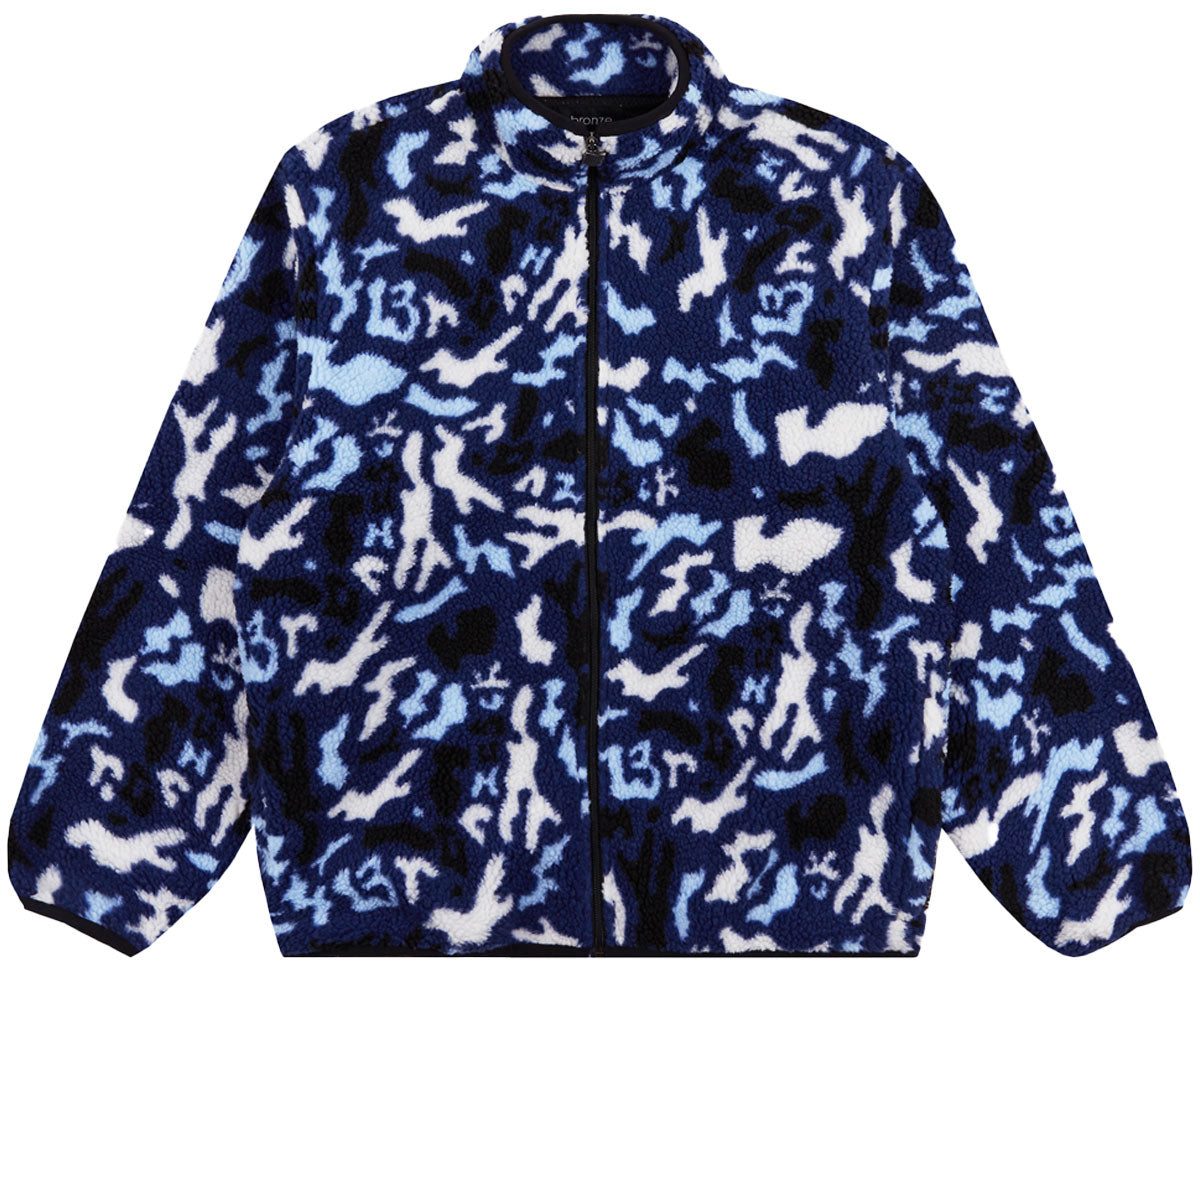 Bronze 56k Camo Fleece Jacket - Blue image 1